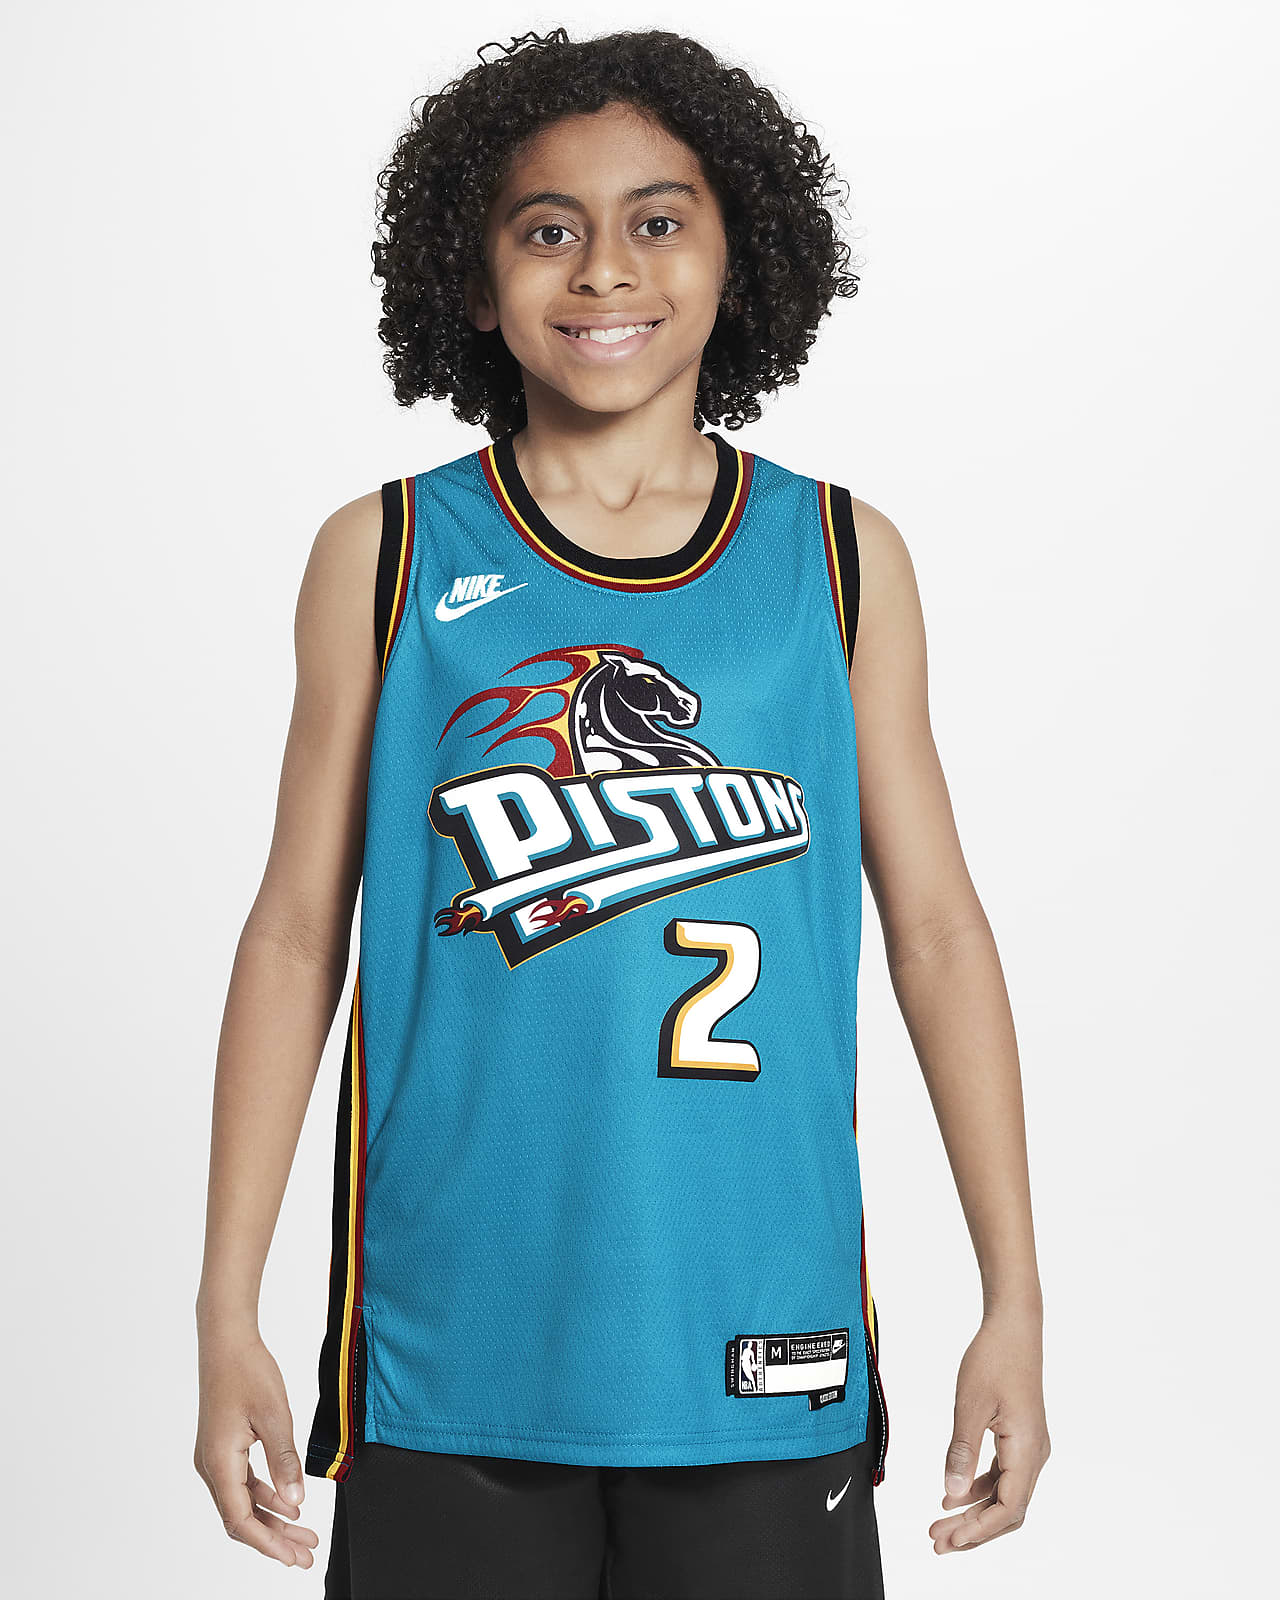 Cade Cunningham Detroit Pistons Camiseta Nike Dri-FIT NBA Swingman - Niño/a